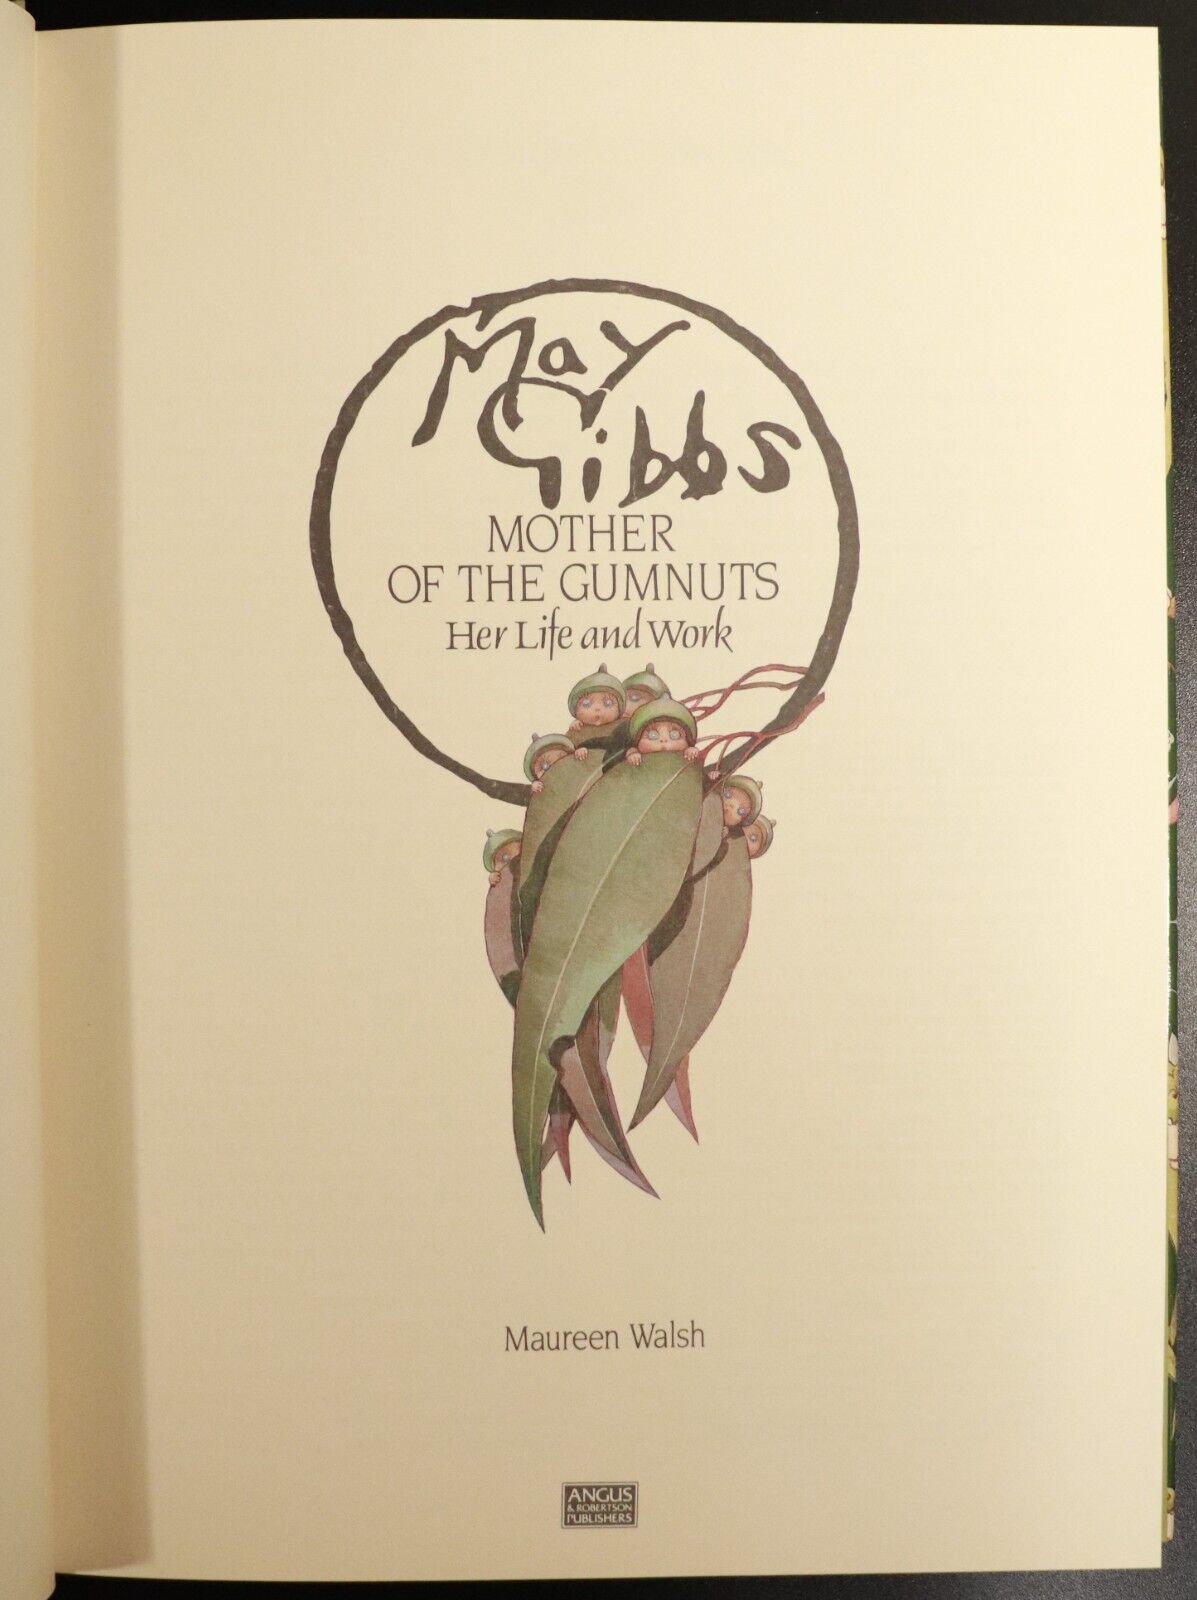 1985 The May Gibbs Collection Gumnut Classics Childrens Book Set + Bonus Book